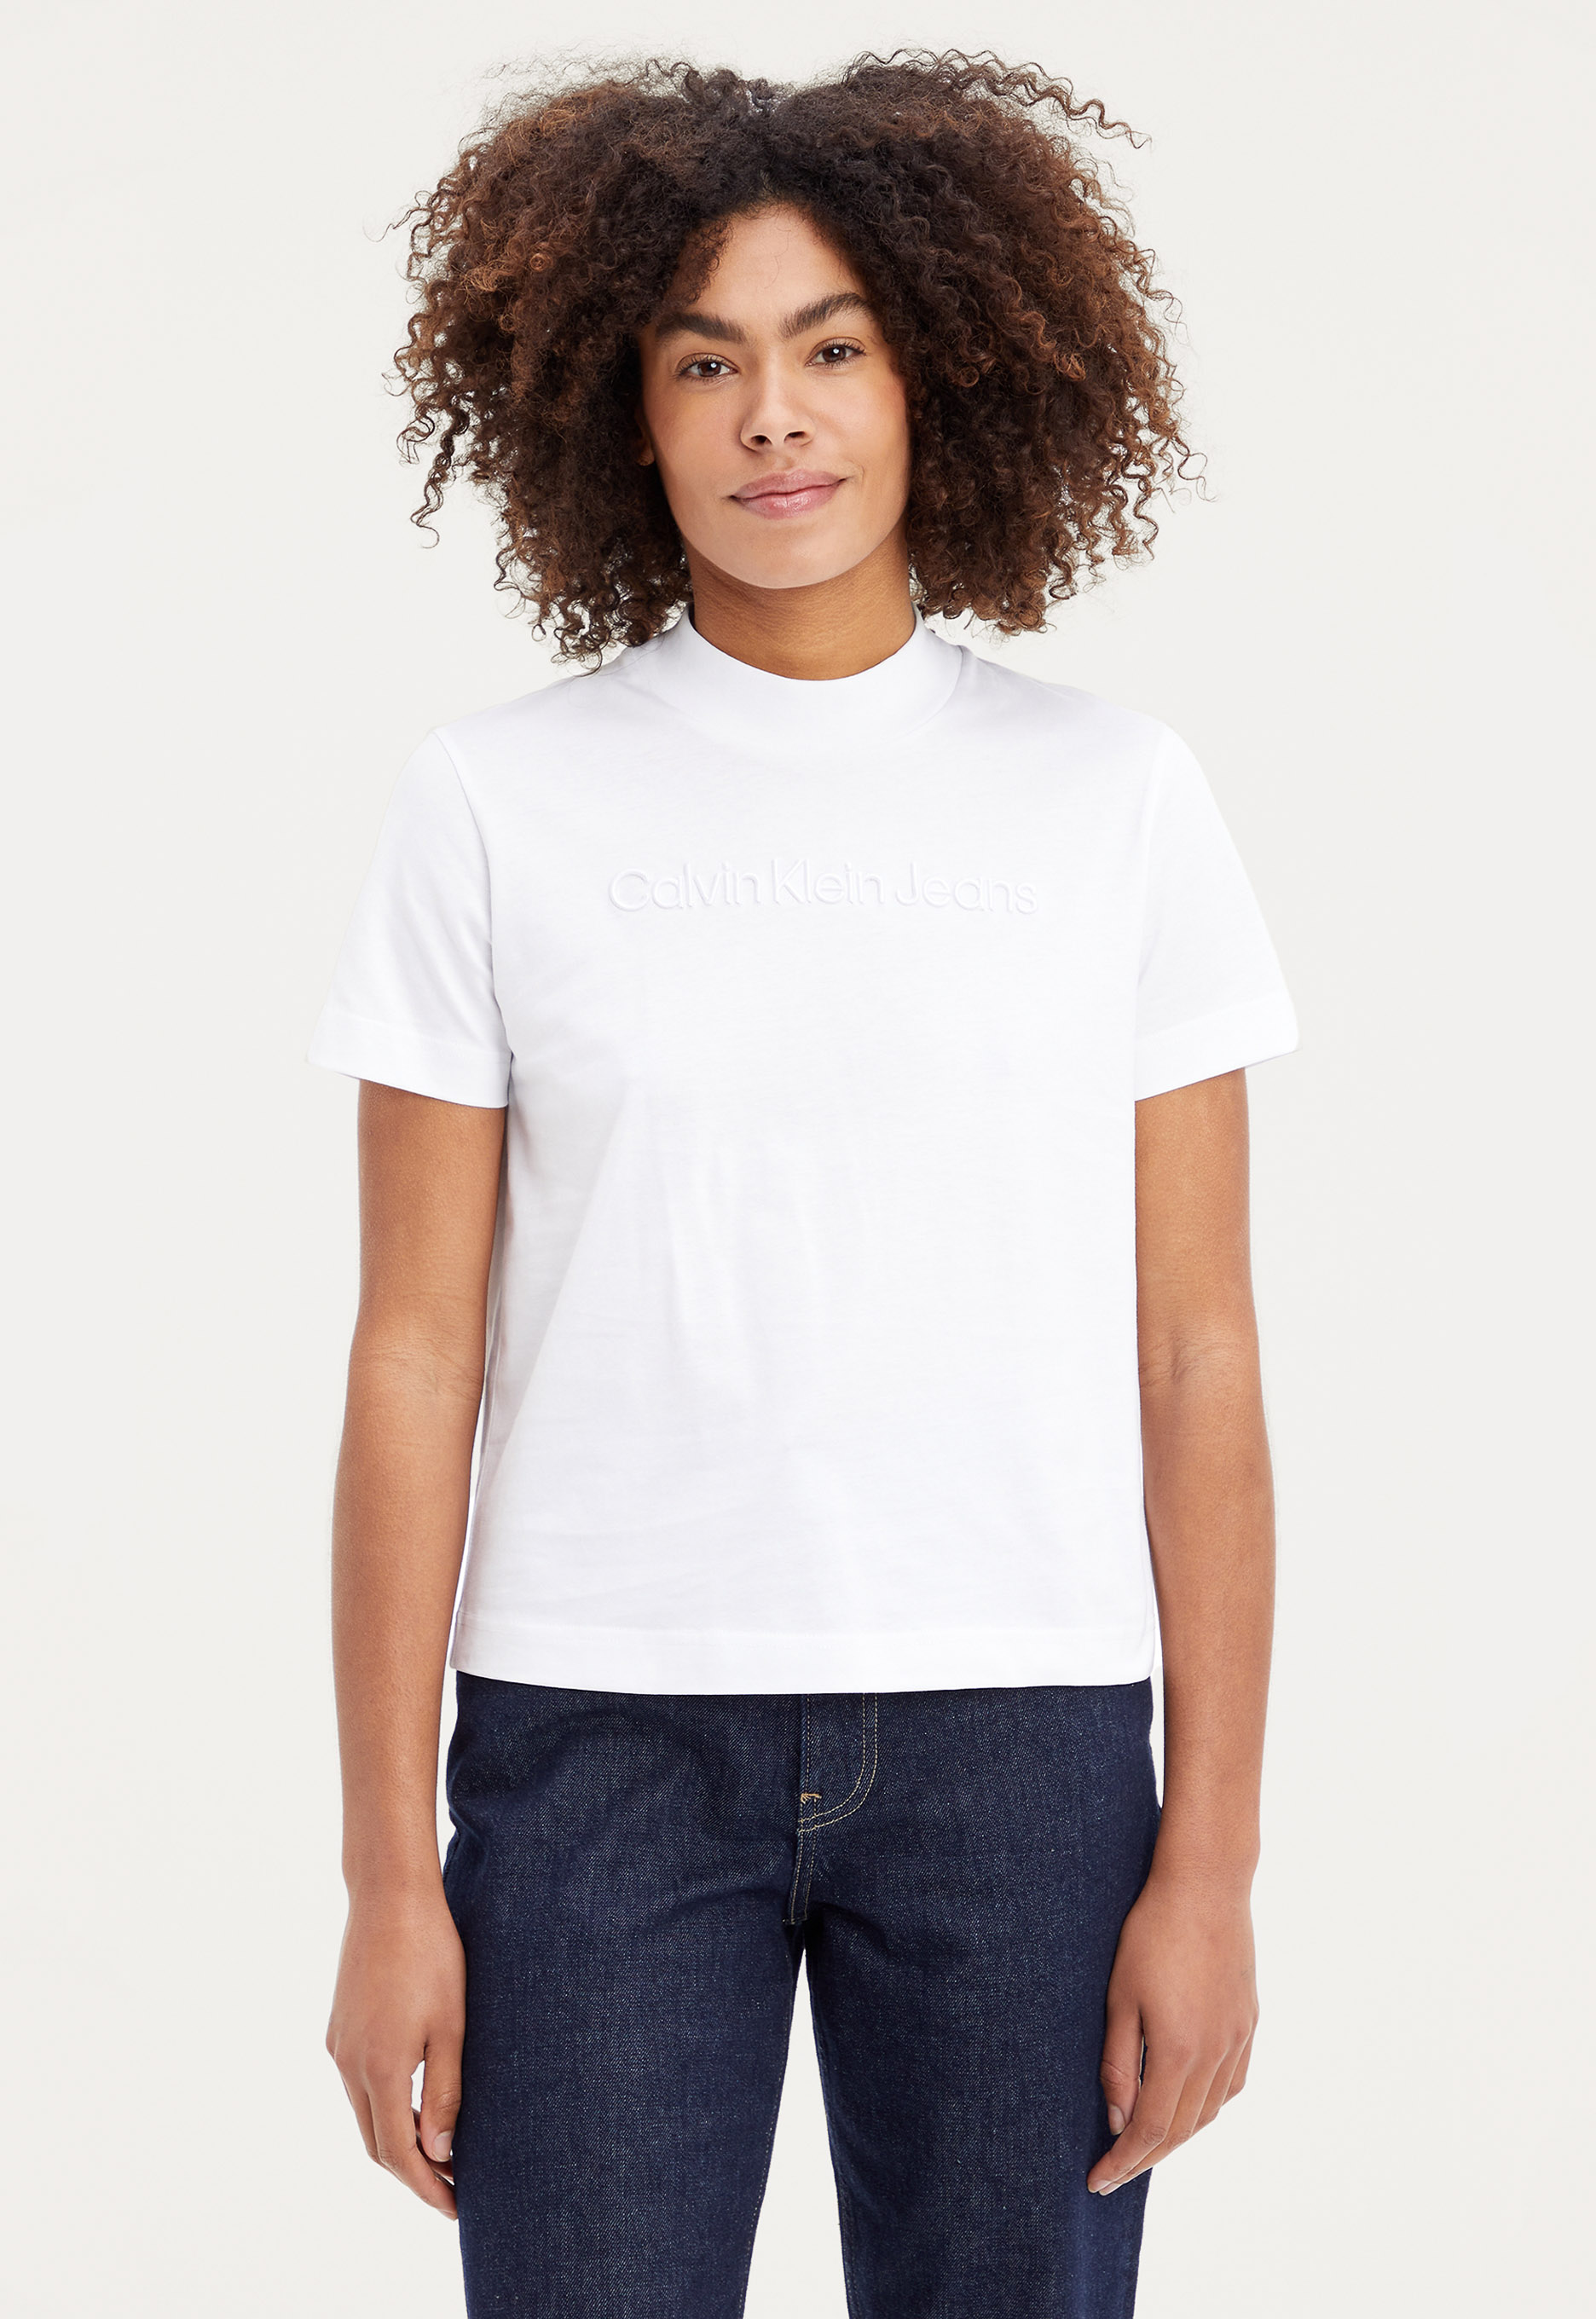 Calvin Klein Raised embroidery T-shirt